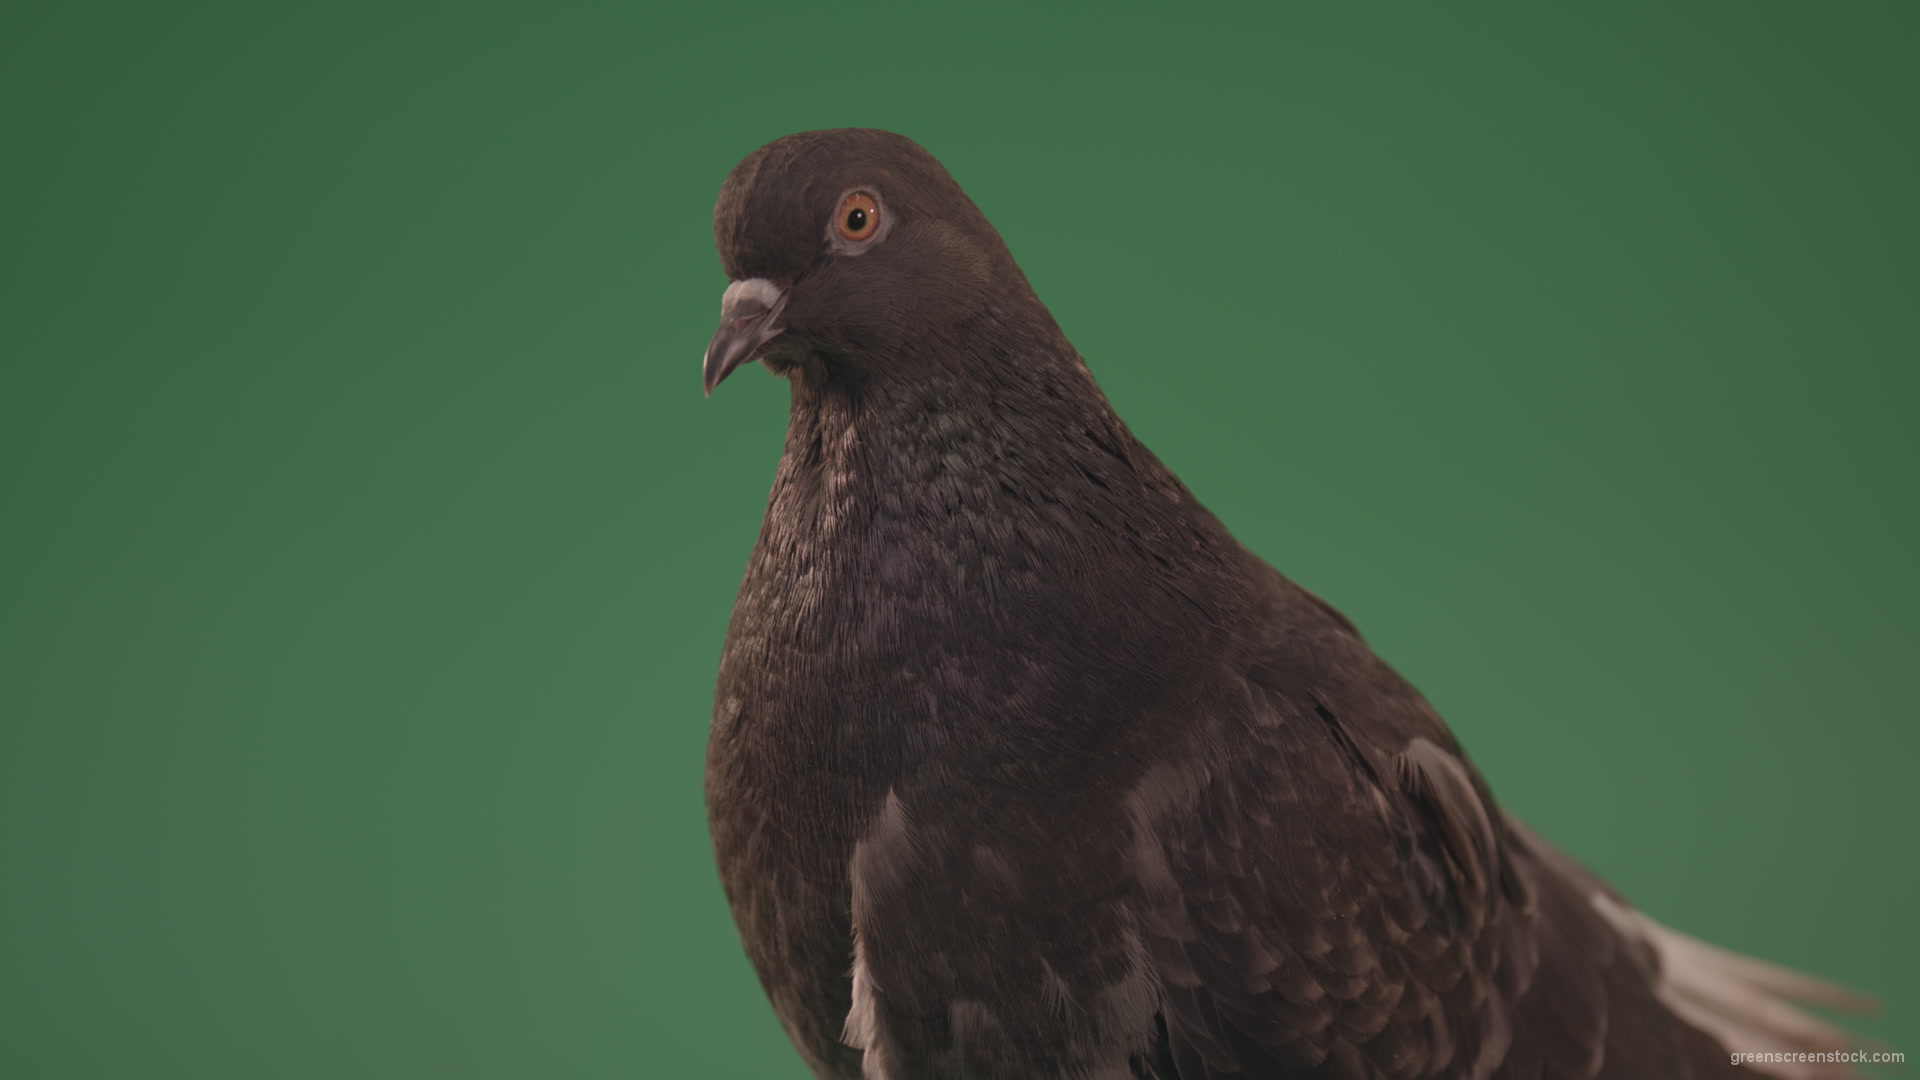 Gray-bird-of-mountain-origin-pigeon-strokes-its-lush-feathers-isolated-in-green-screen-studio_009 Green Screen Stock